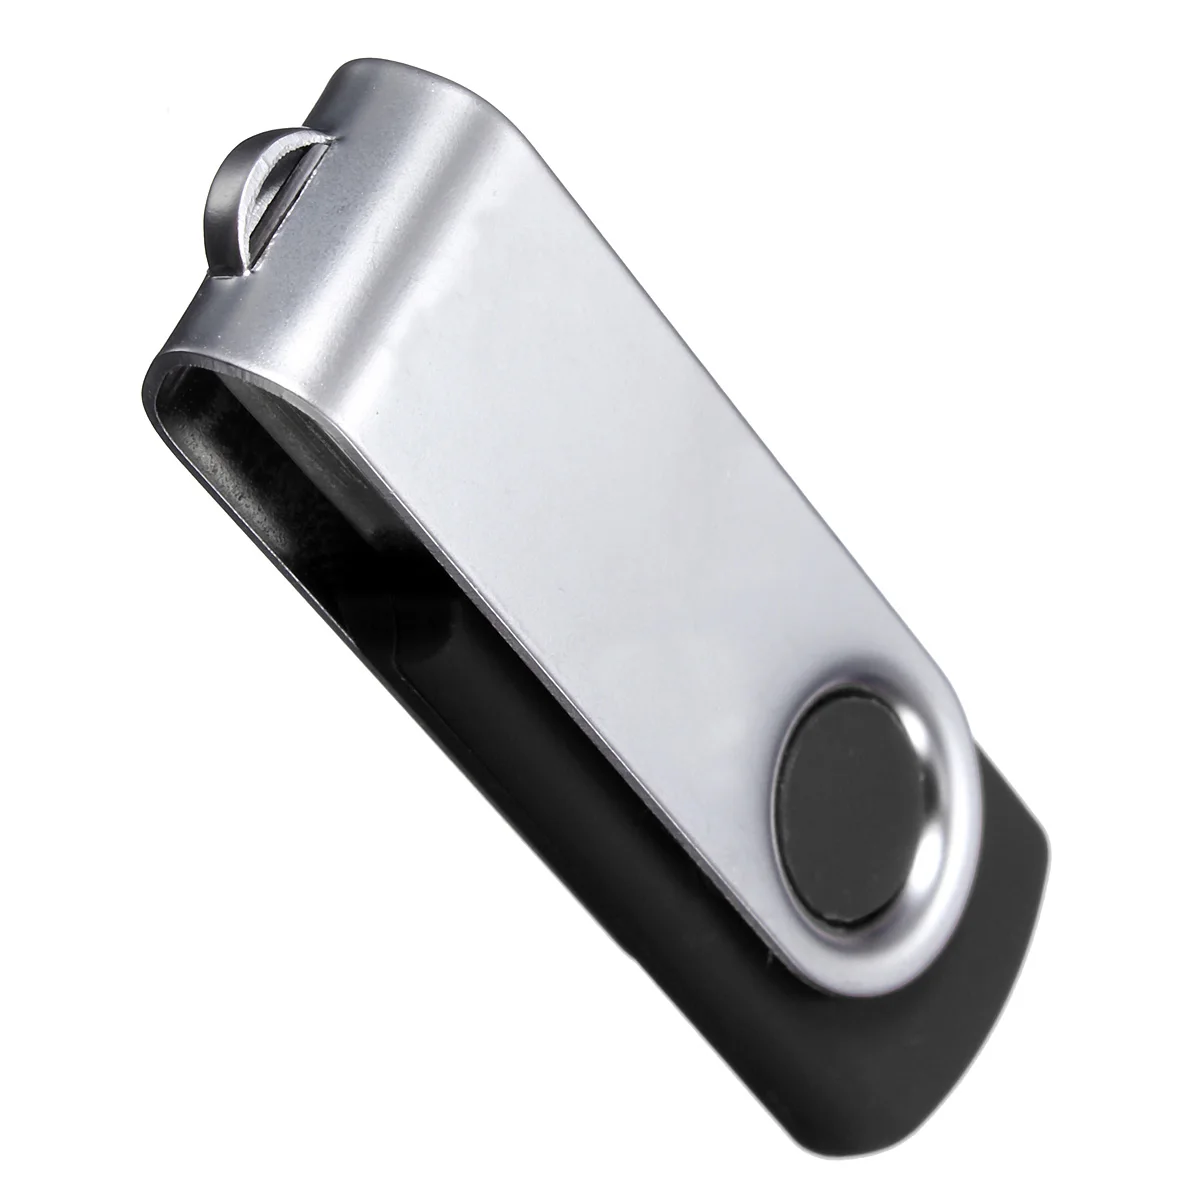 Цветной смартфон флеш-диск Usb 2,0 2 ГБ флеш-накопитель Флешка внешний накопитель Micro Usb флэш-накопитель